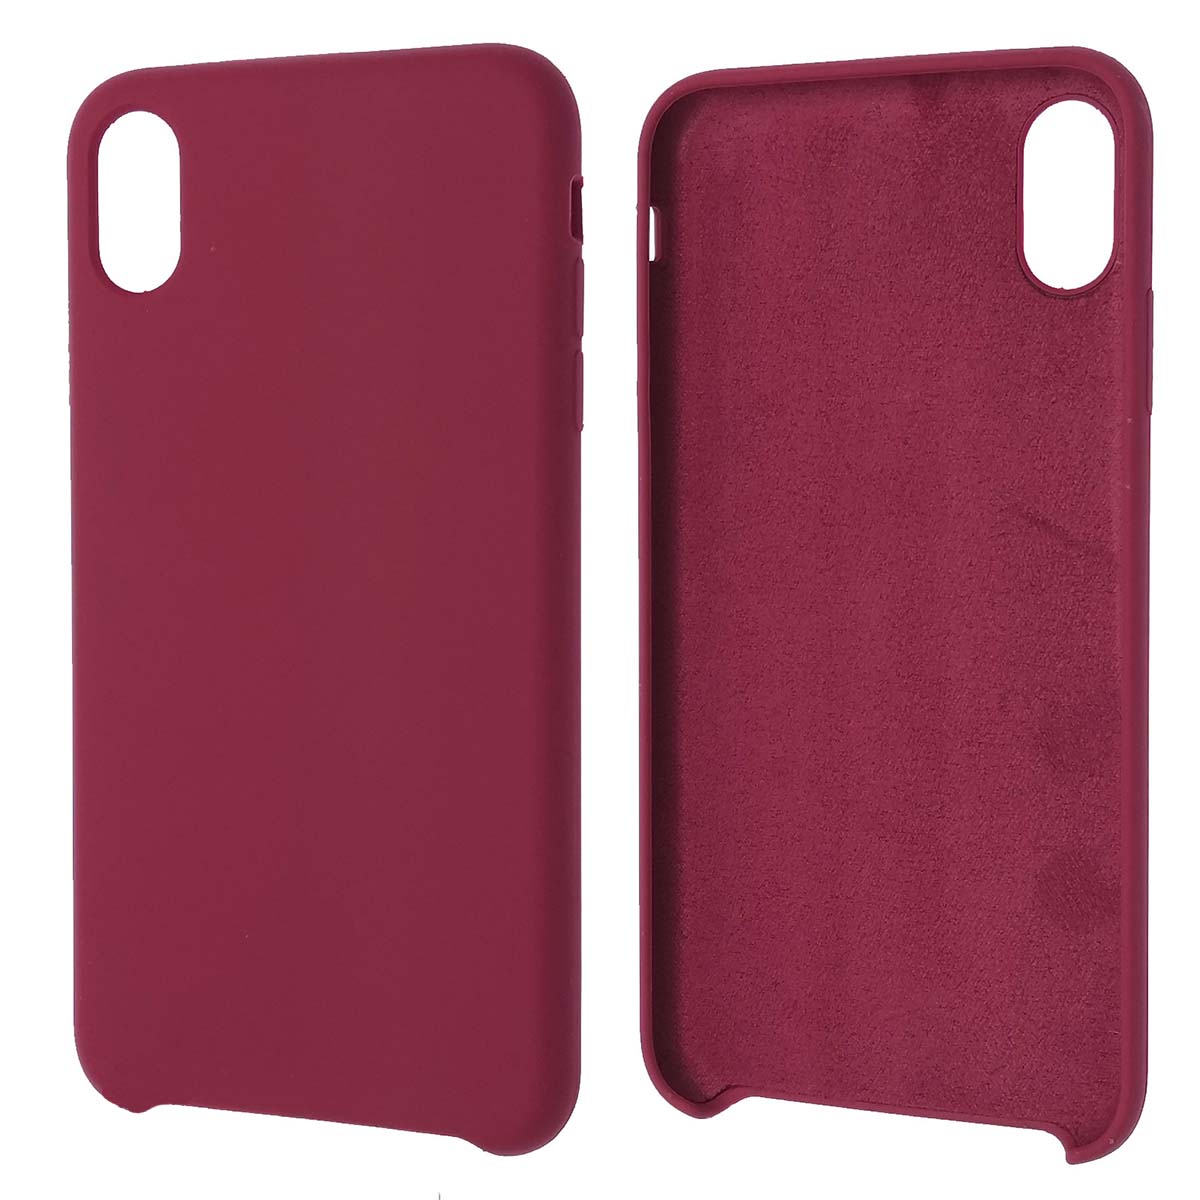 Чехол накладка Silicon Case для APPLE iPhone XS MAX, силикон, бархат, светло бордовый